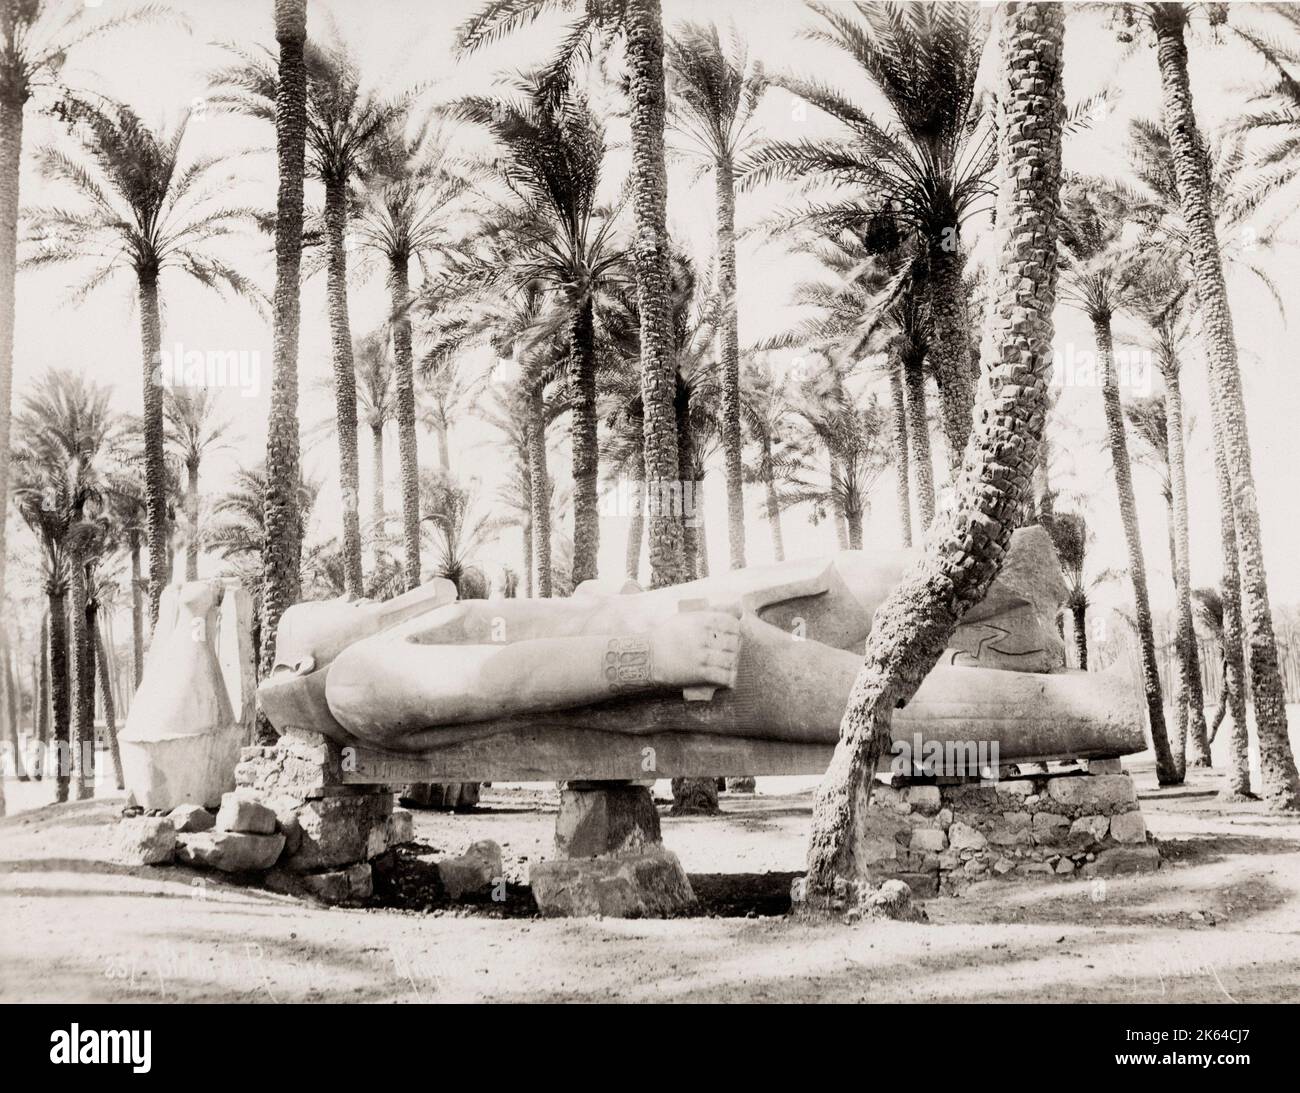 Vintage 19. Jahrhundert Foto - gefallene Statue von Ramses II in Memphis, Ägypten. Stockfoto